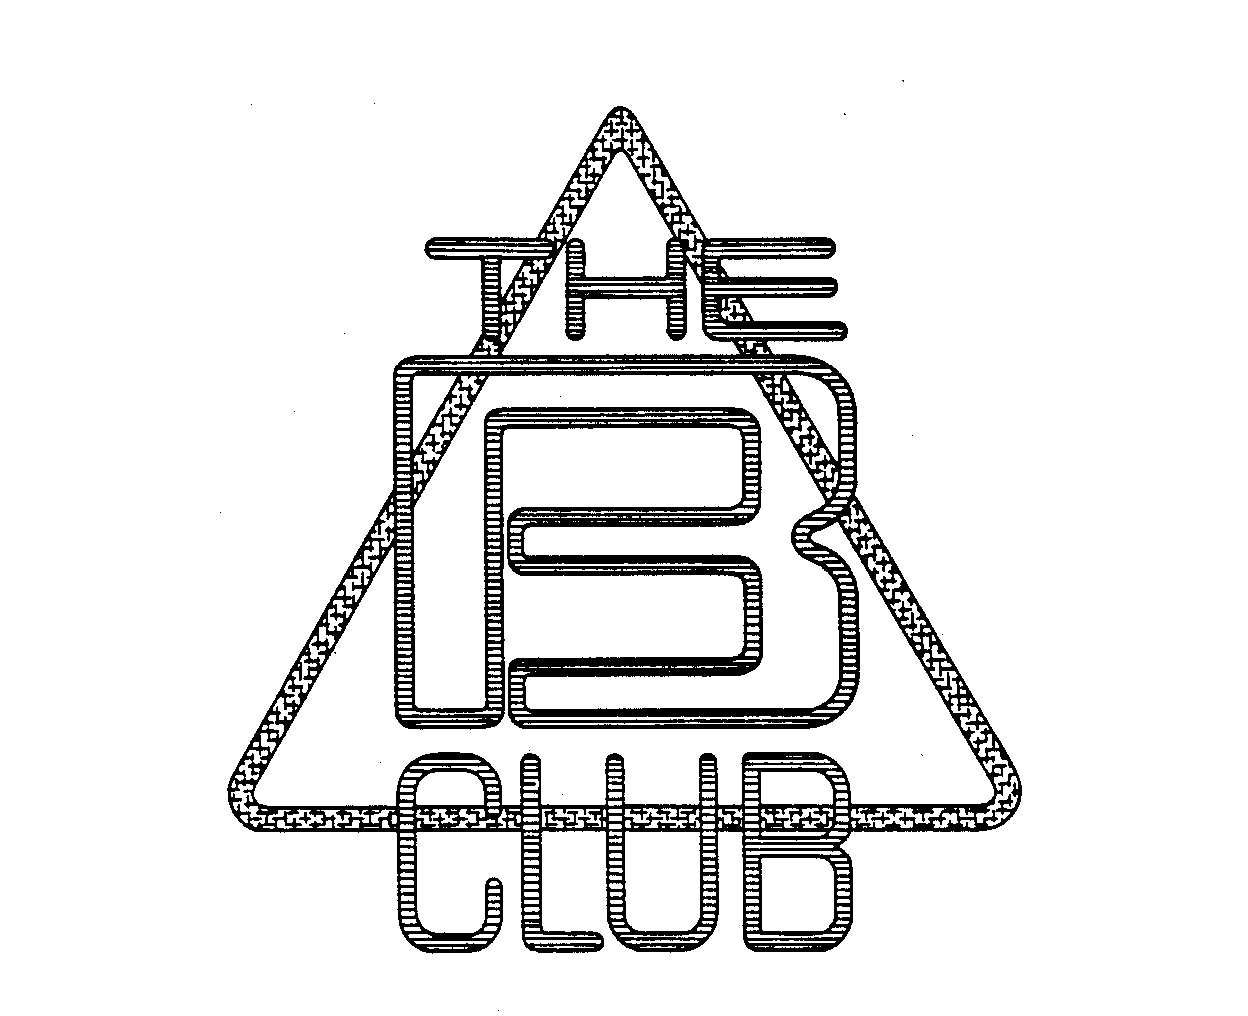 THE B CLUB